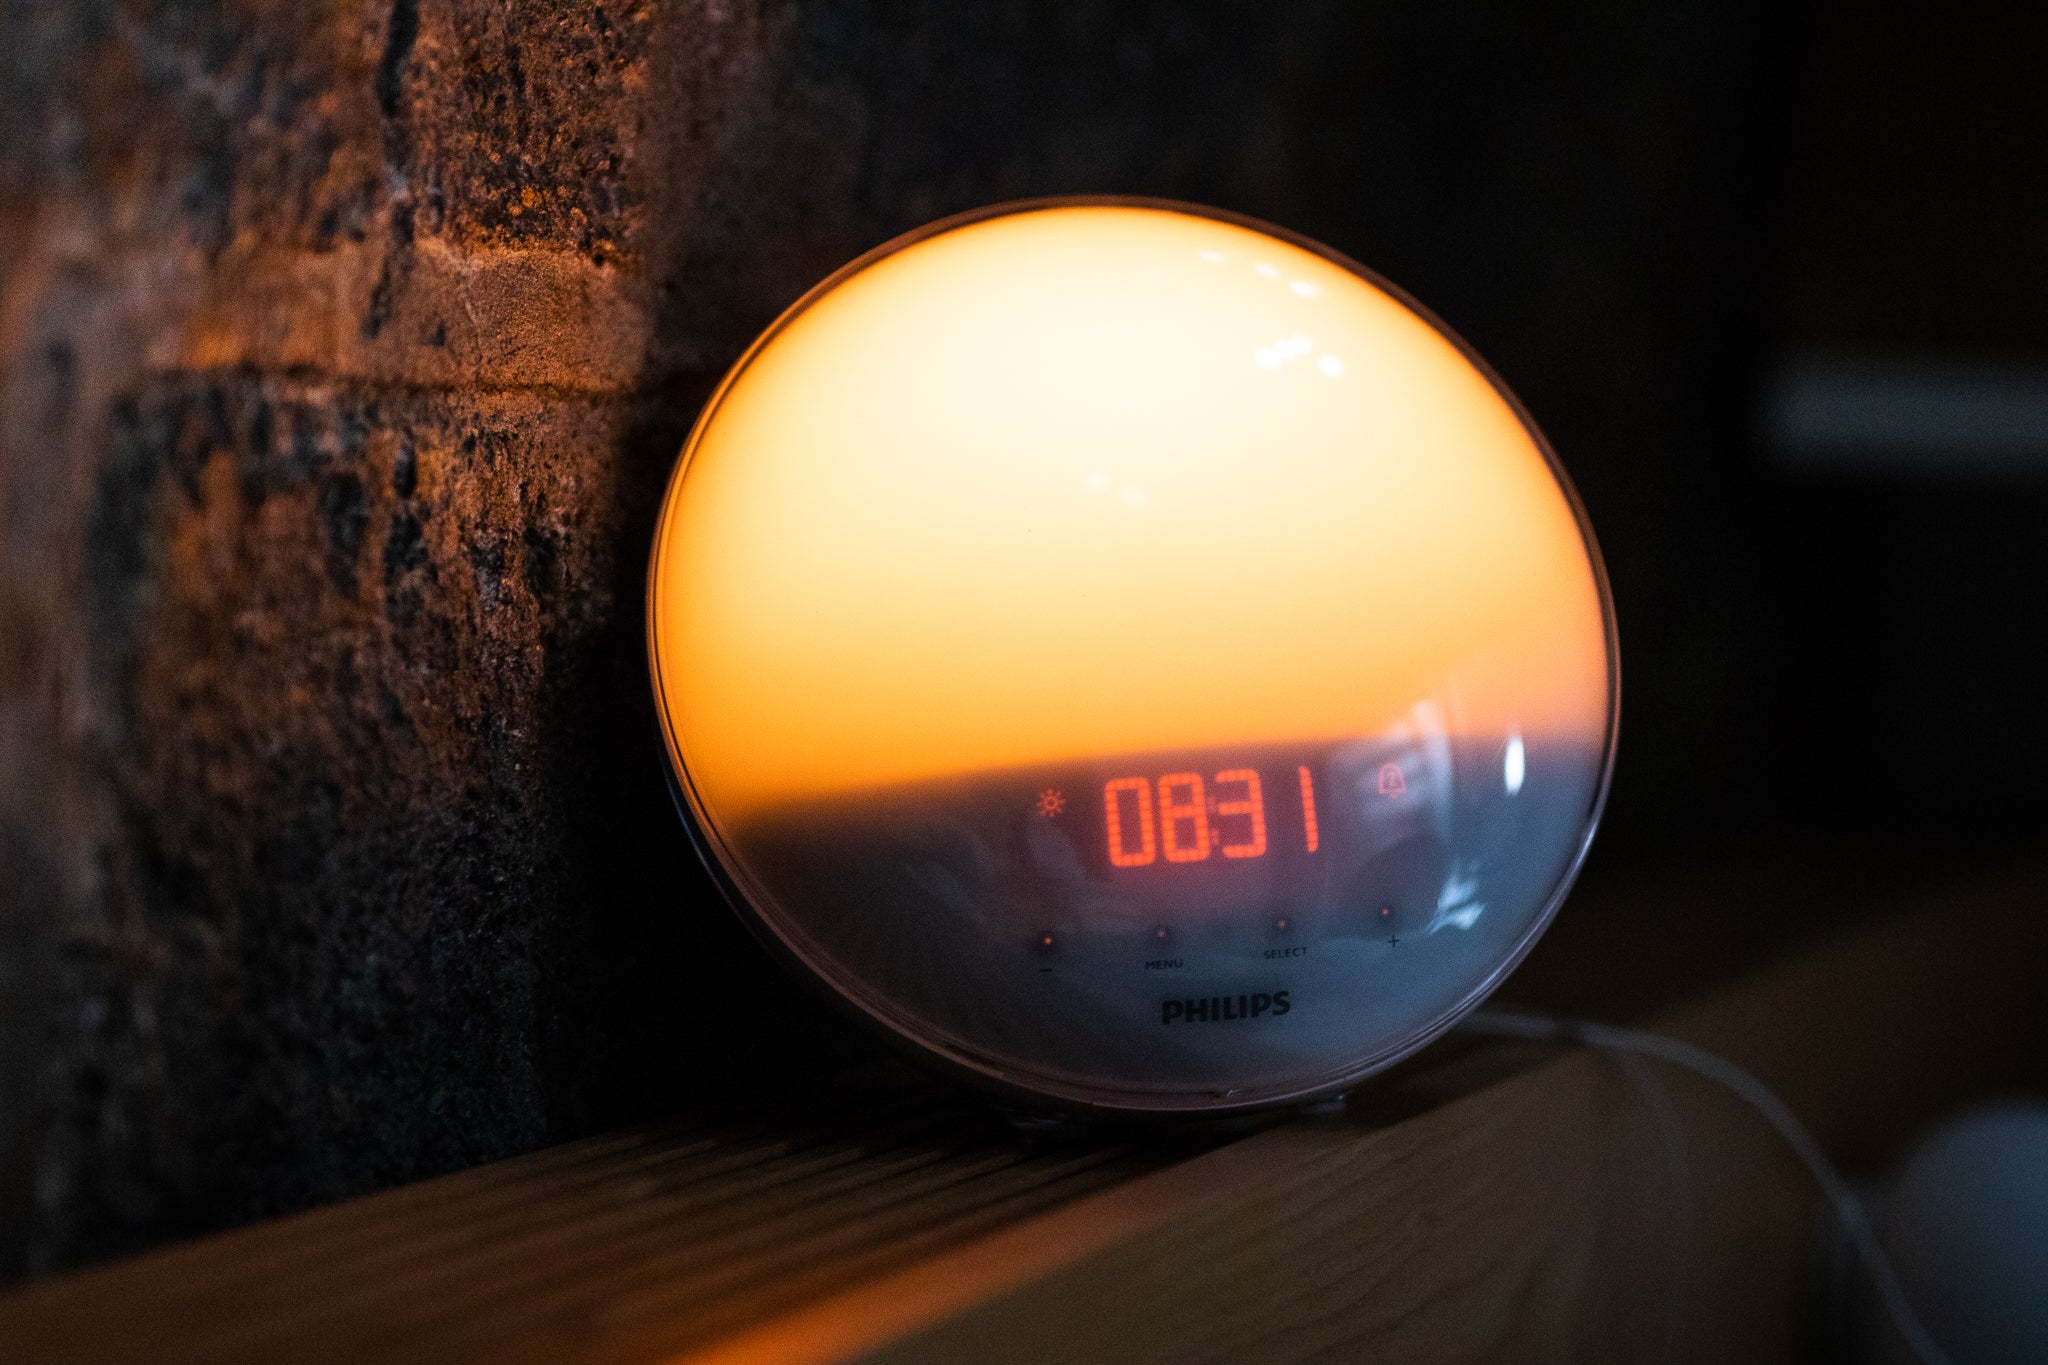 A Philips wake-up light alarm clock.